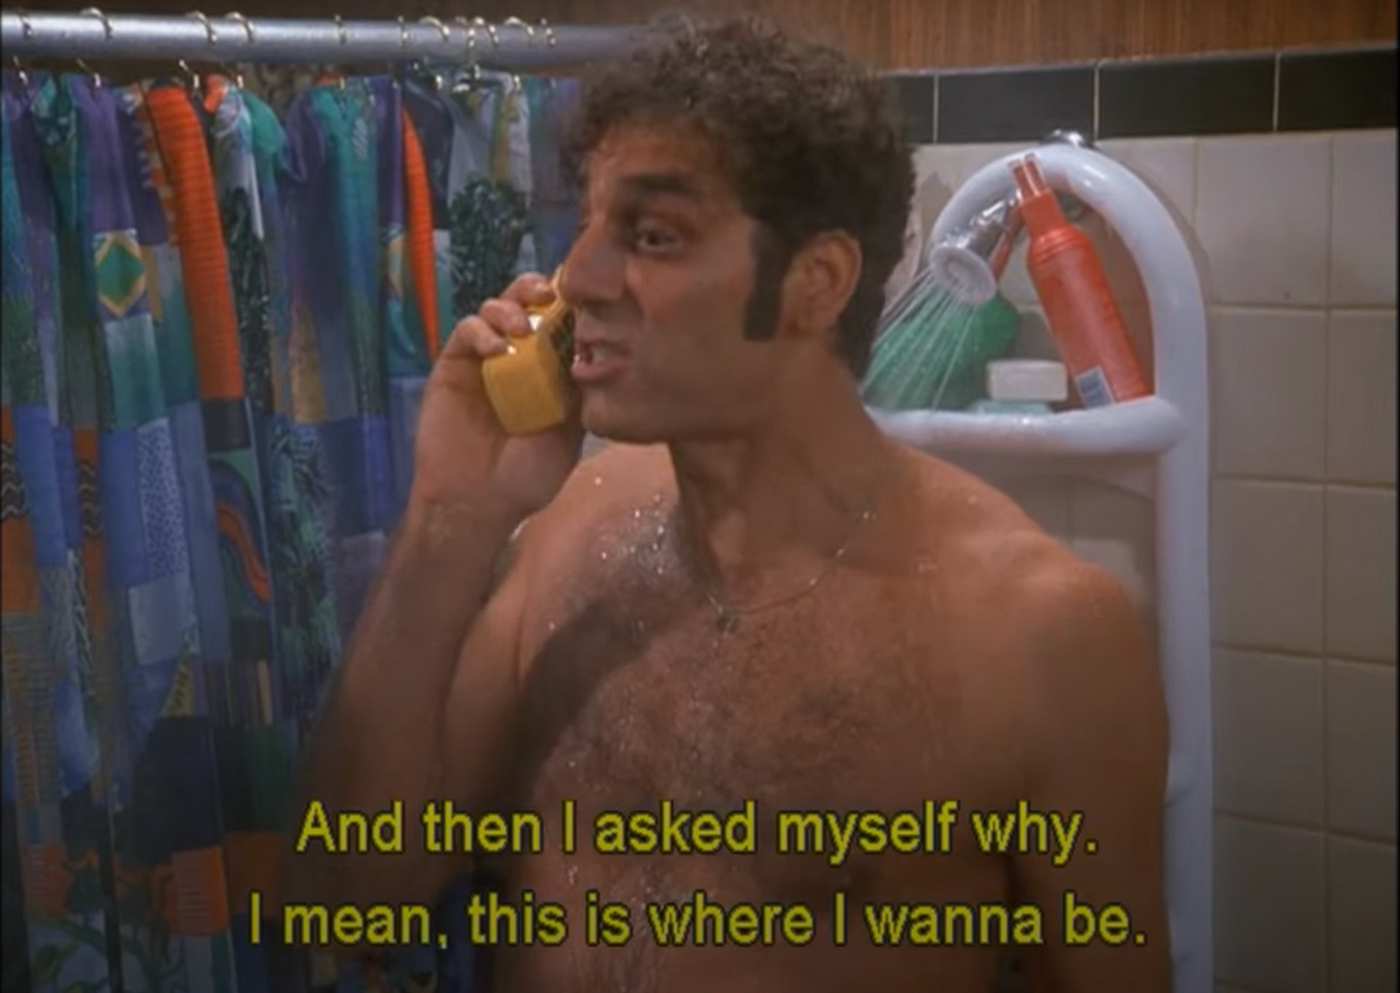 Seinfeld  Calvin Klein steals Kramer's idea then use him as model